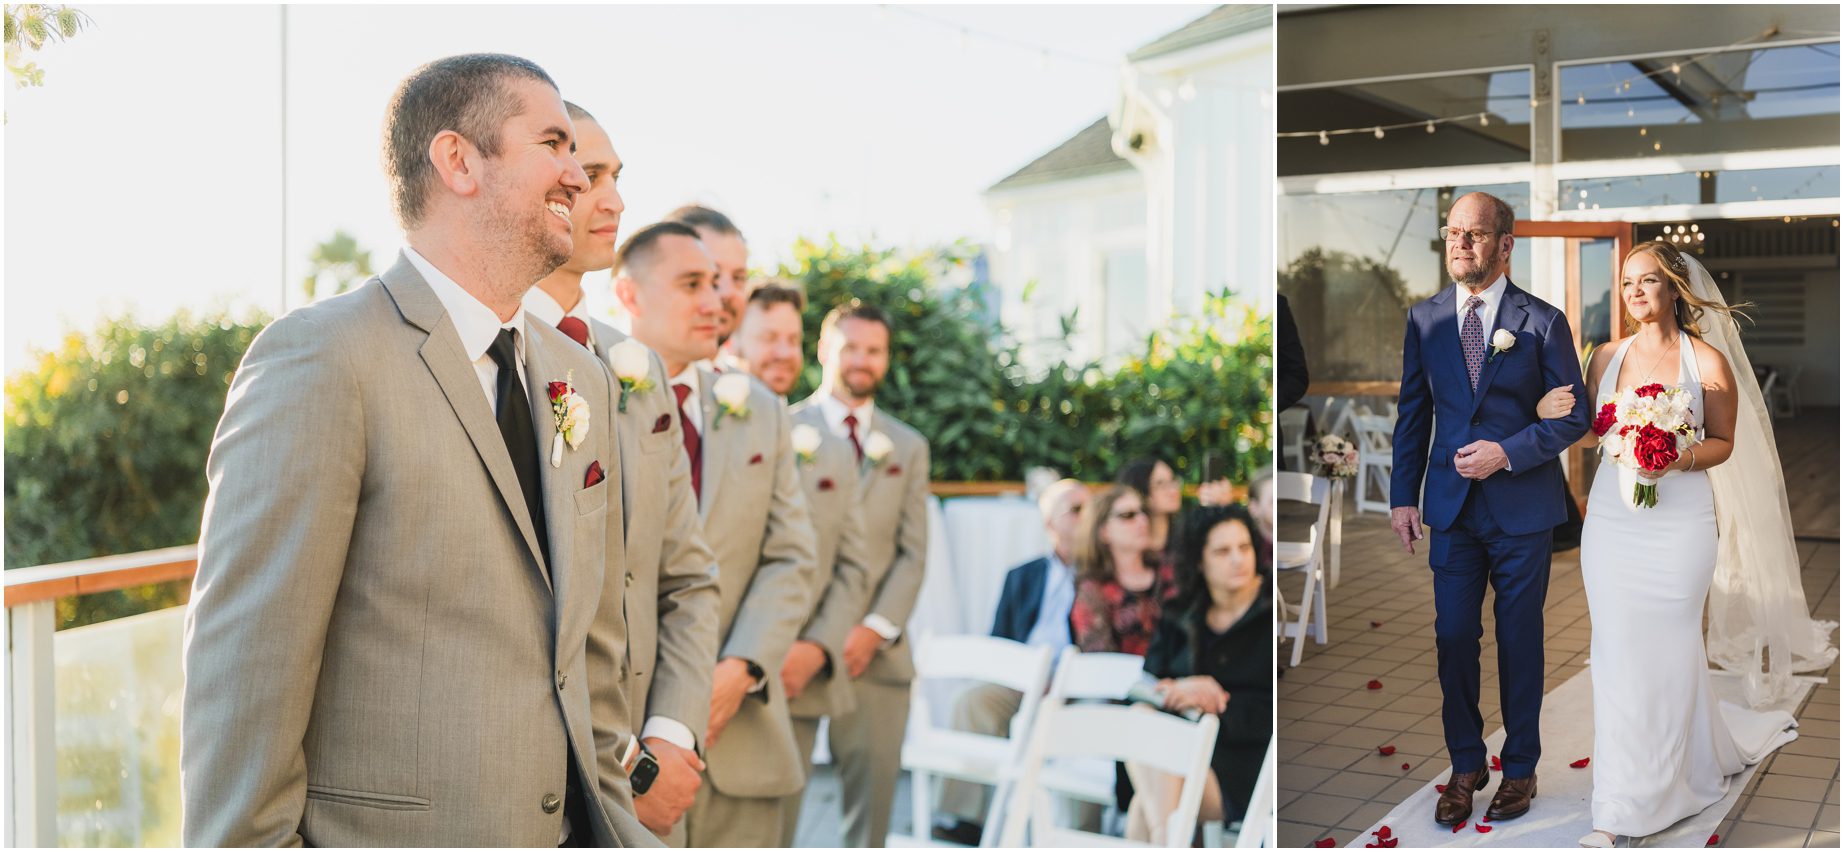 A groom watches the bride walk down the aisle at a sunset beach wedding at Malibu west beach club